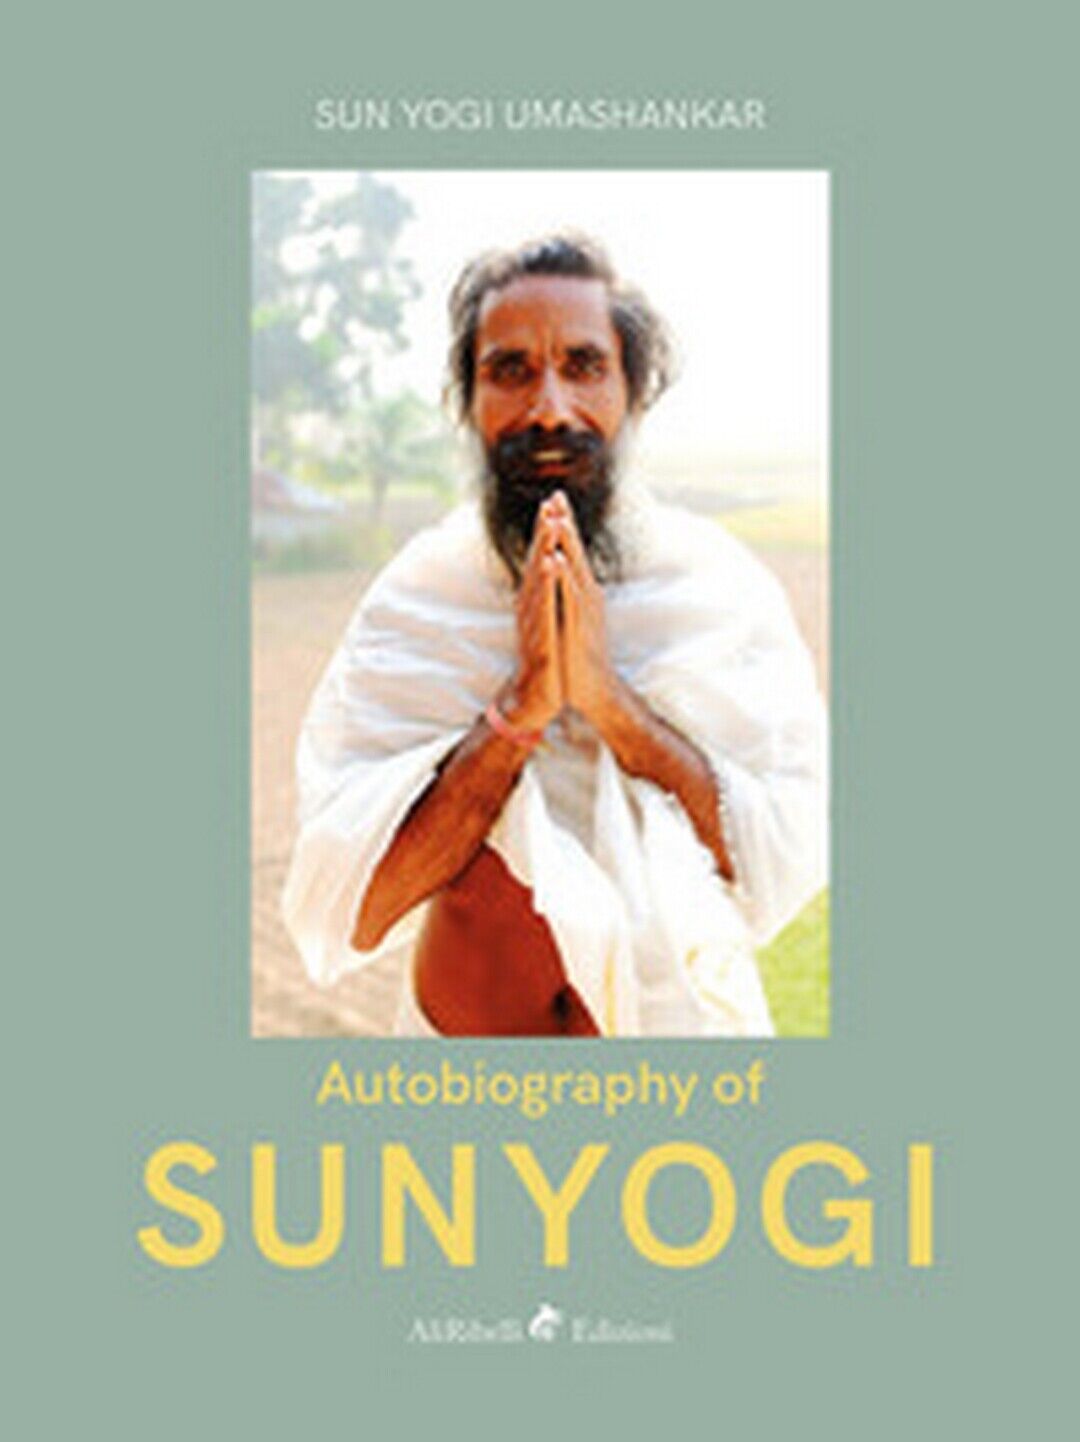 Autobiography of Sunyogi  di Sunyogi Umasankar,  2020,  Youcanprint